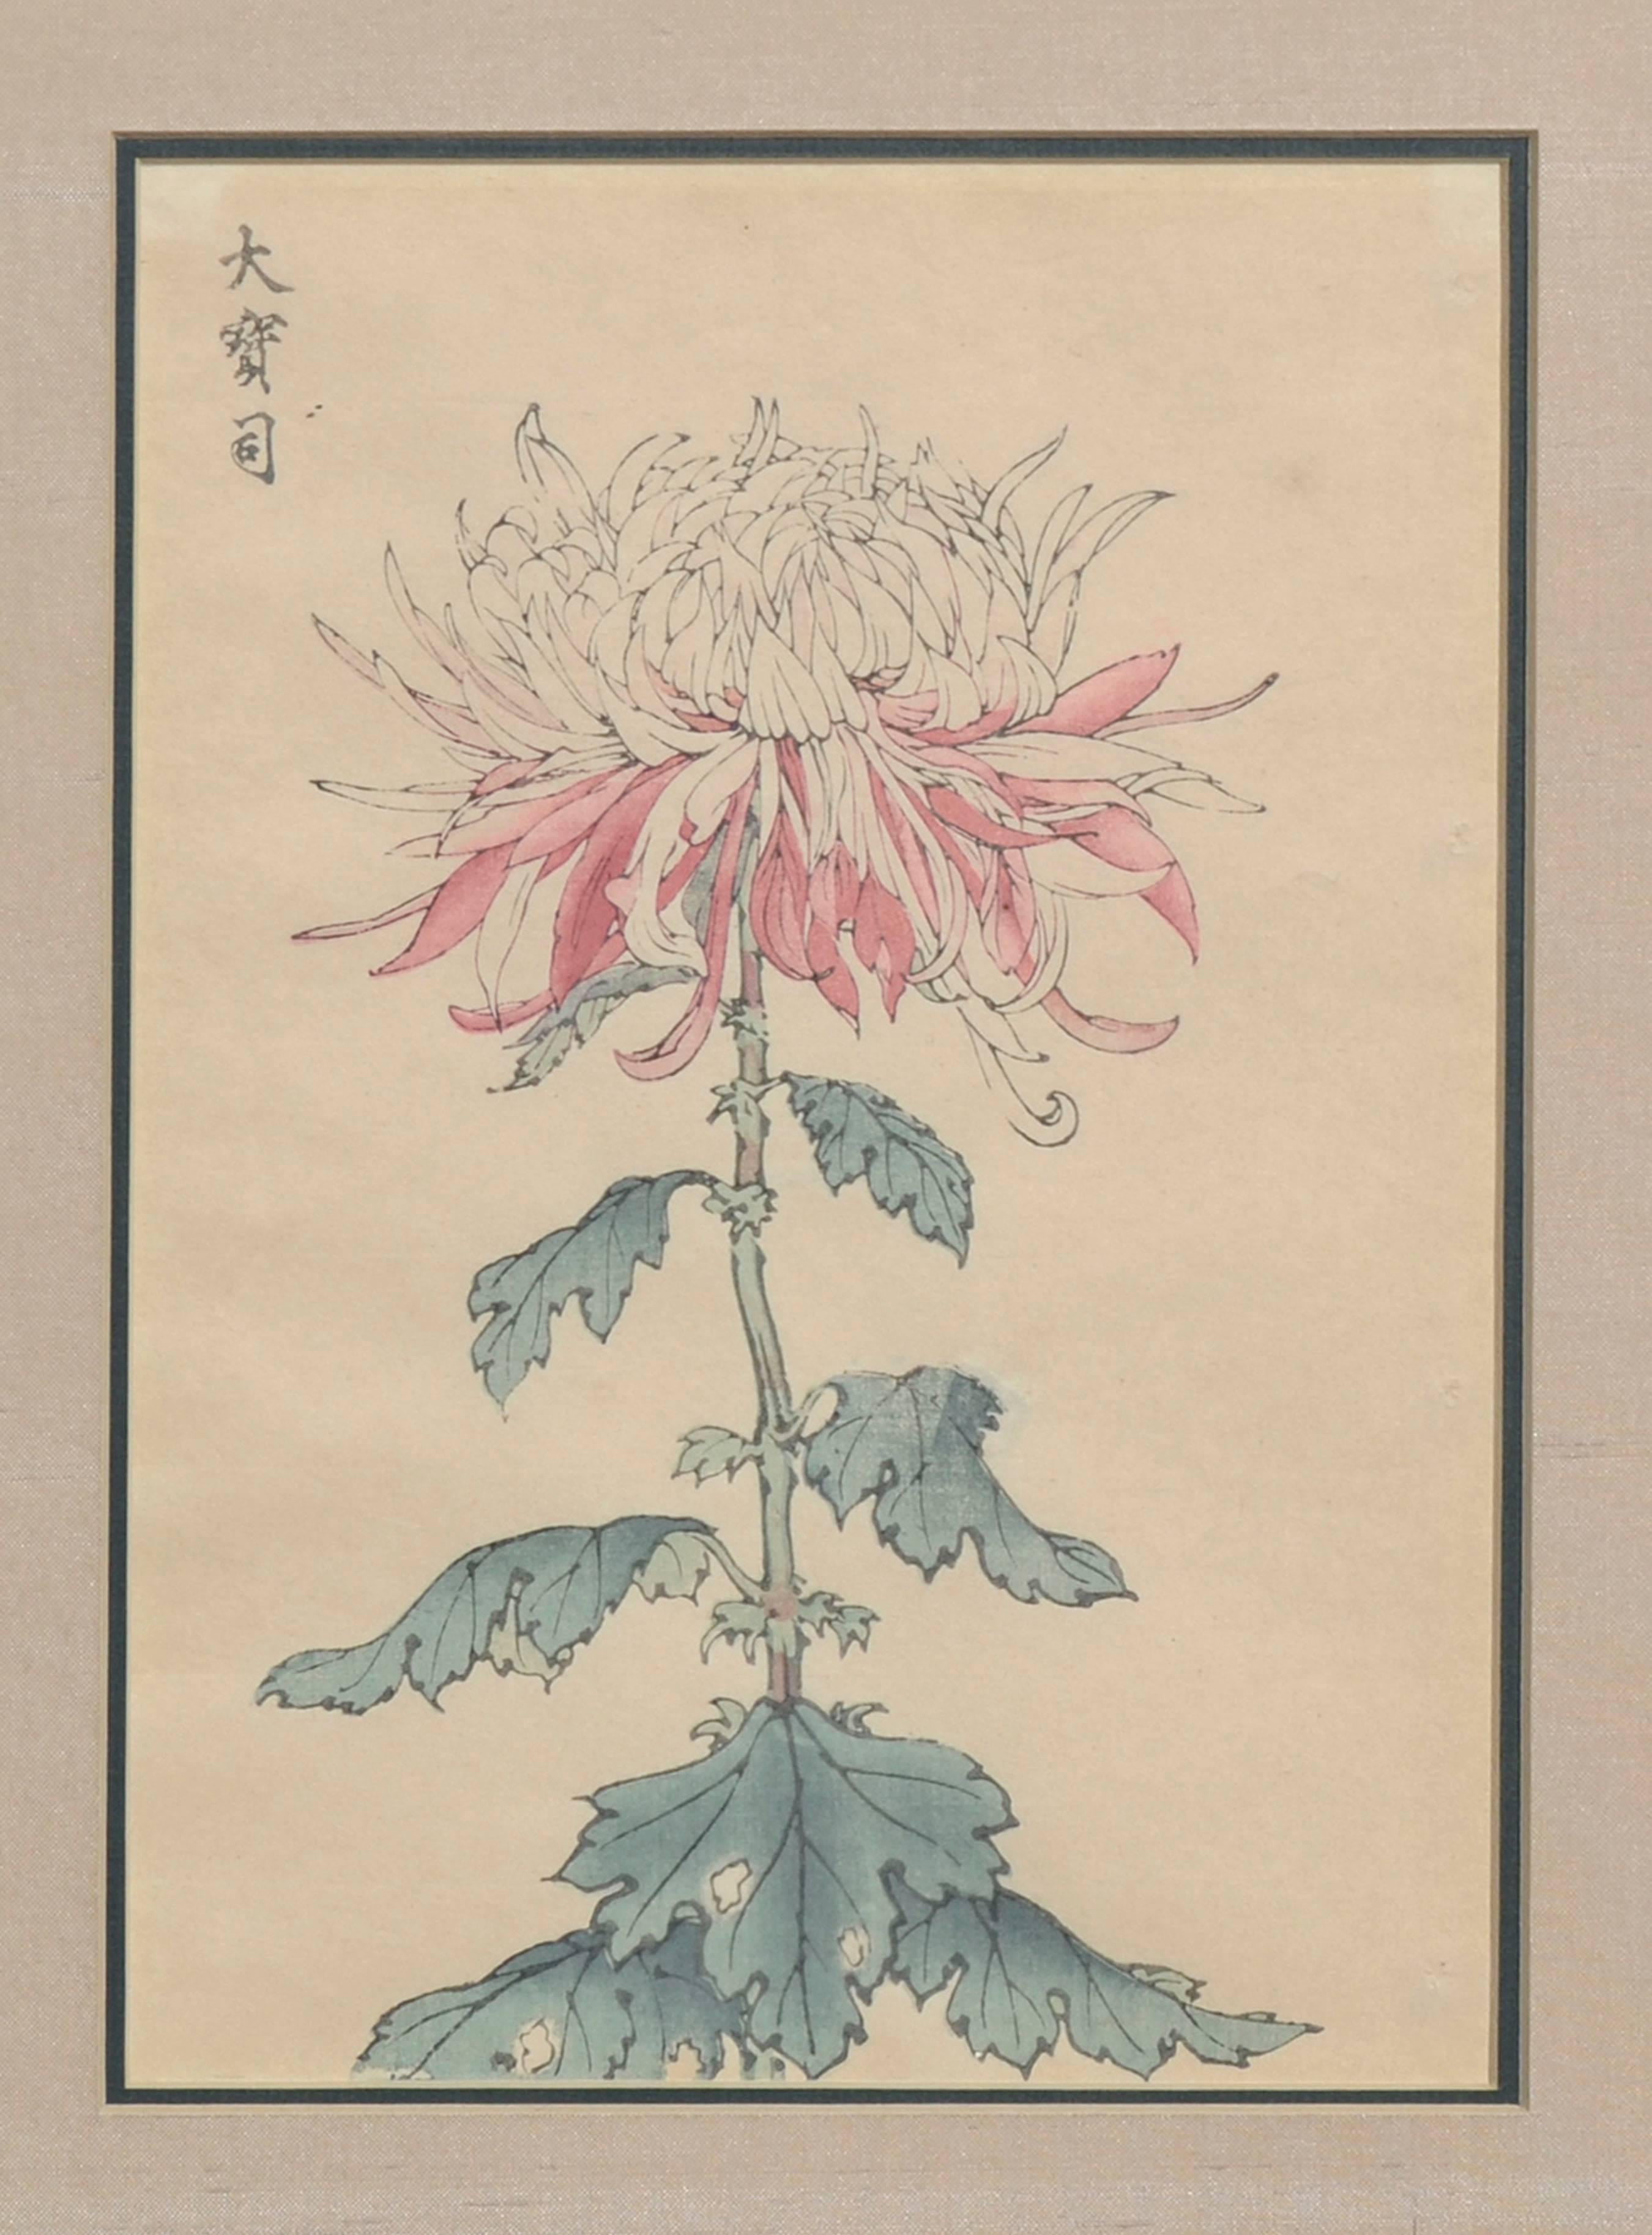 Late 19th Century Botanical Japanese Woodcuts -- Two Chrysanthemums - Print by Gessai Gabimaru